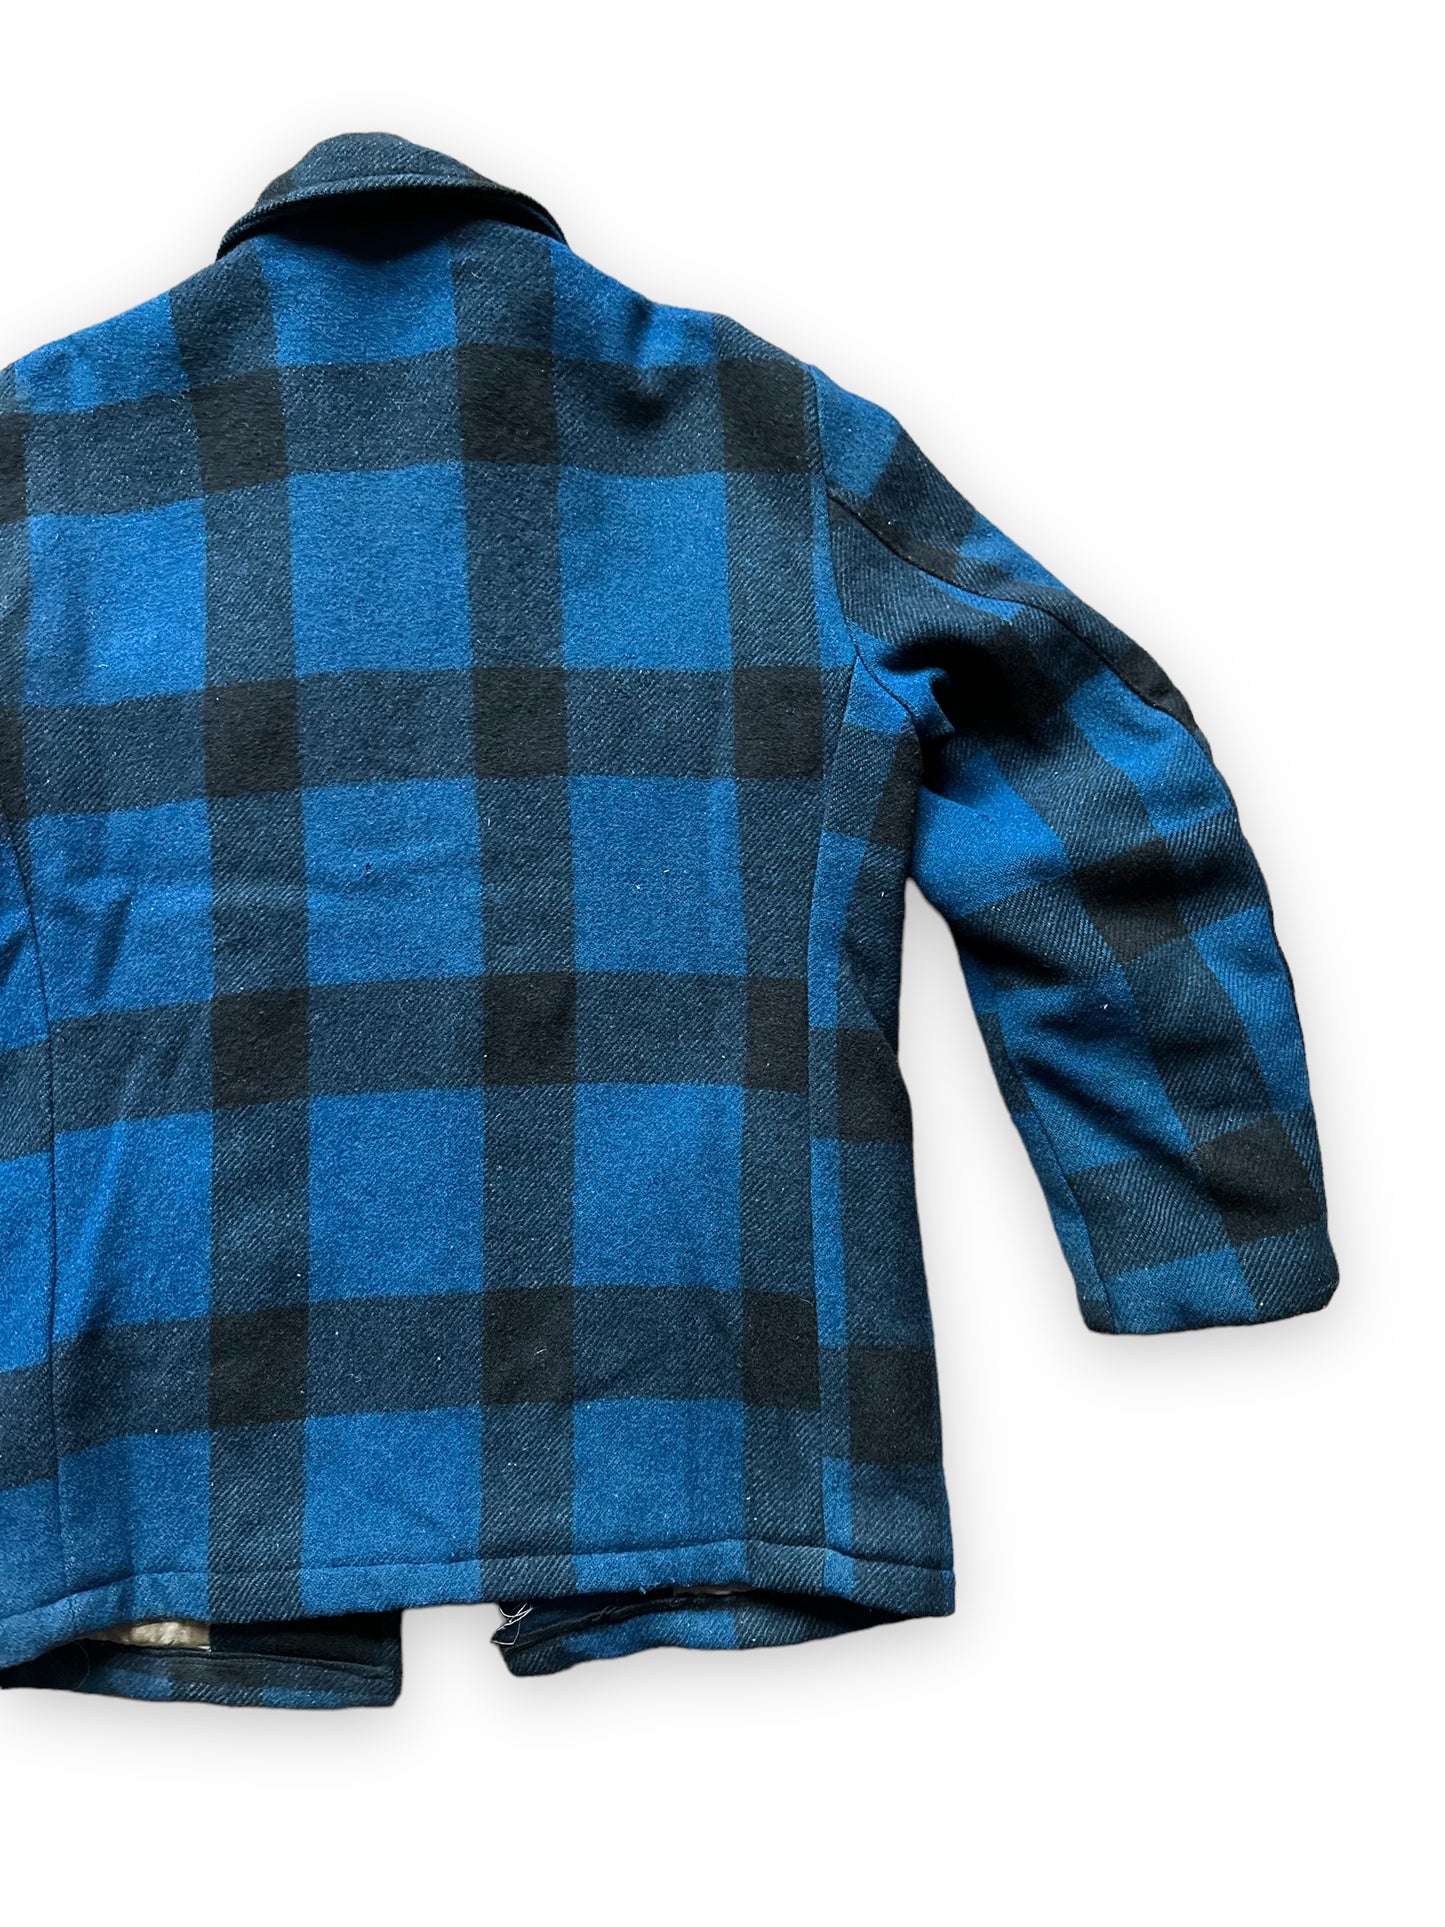 Right Rear View on Vintage Black Bear Cobalt Blue and Black Wool Coat SZ L  |  Vintage Workwear Seattle | Barn Owl Vintage Seattle